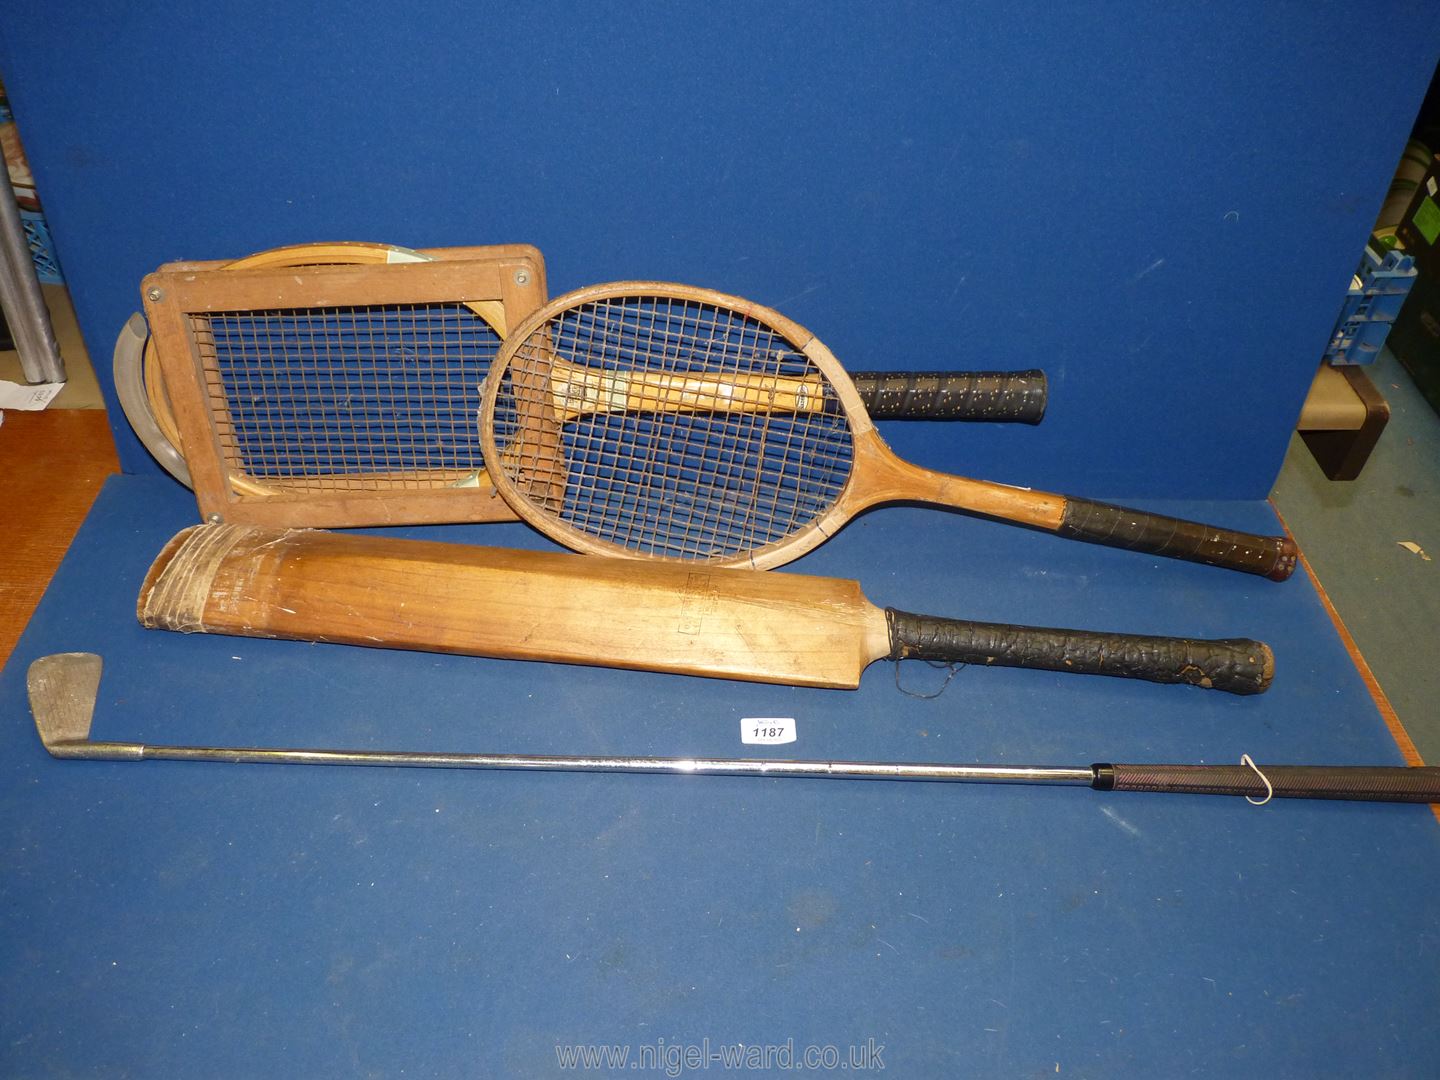 A Slazenger tennis racquet with press, Gray-Nicolls Ltd.